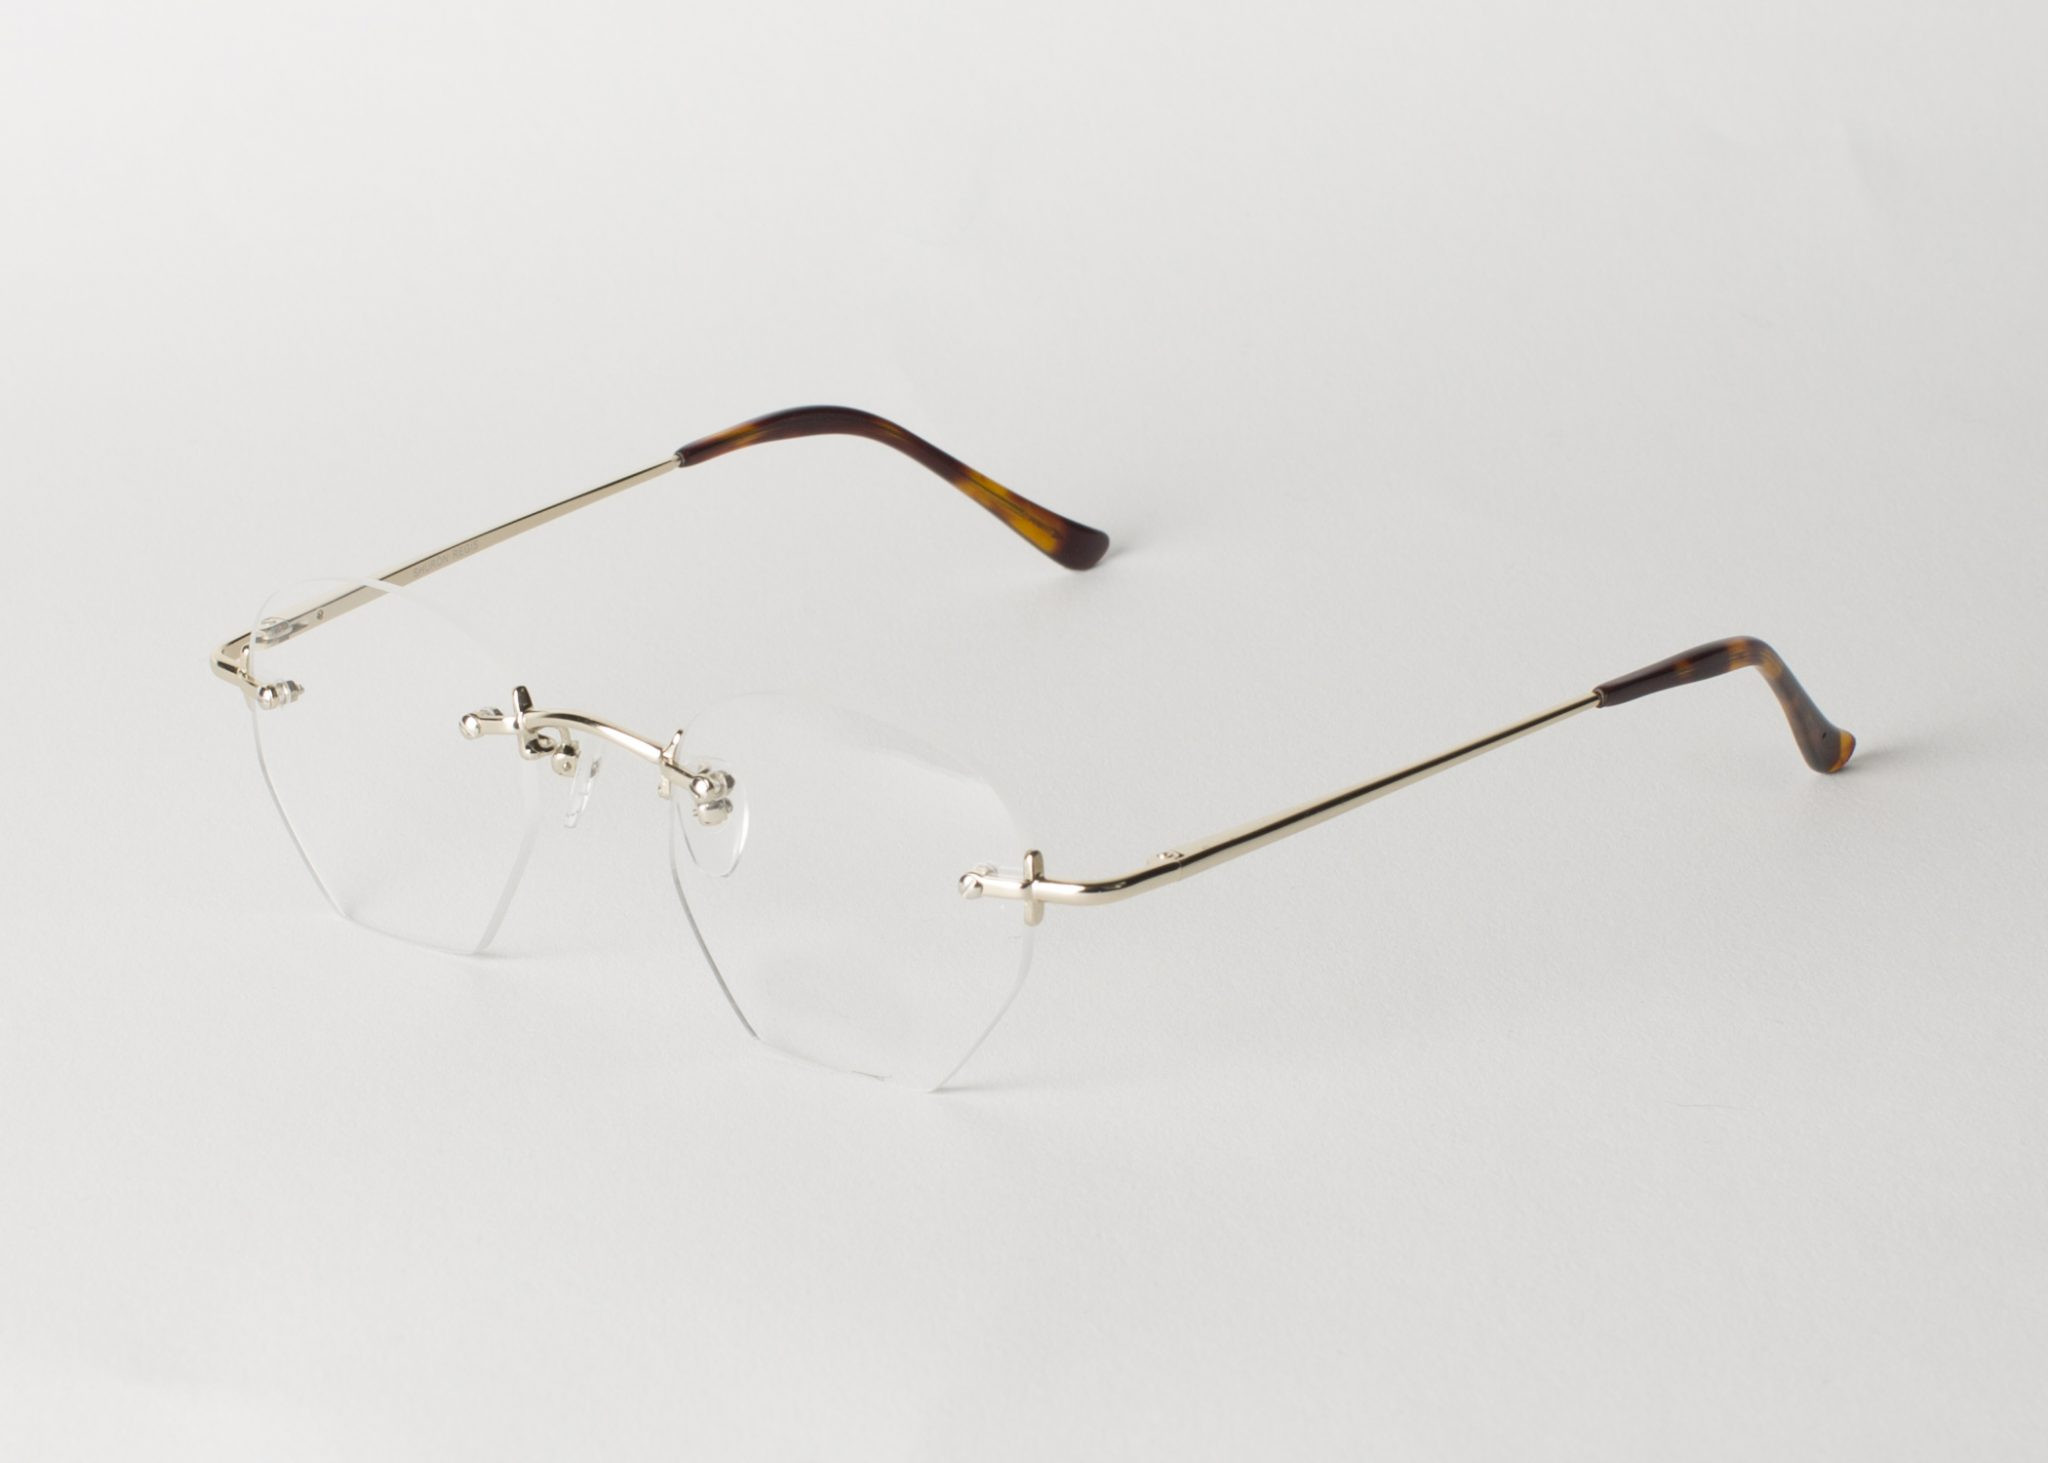 Shuron Regis II Eyeglasses